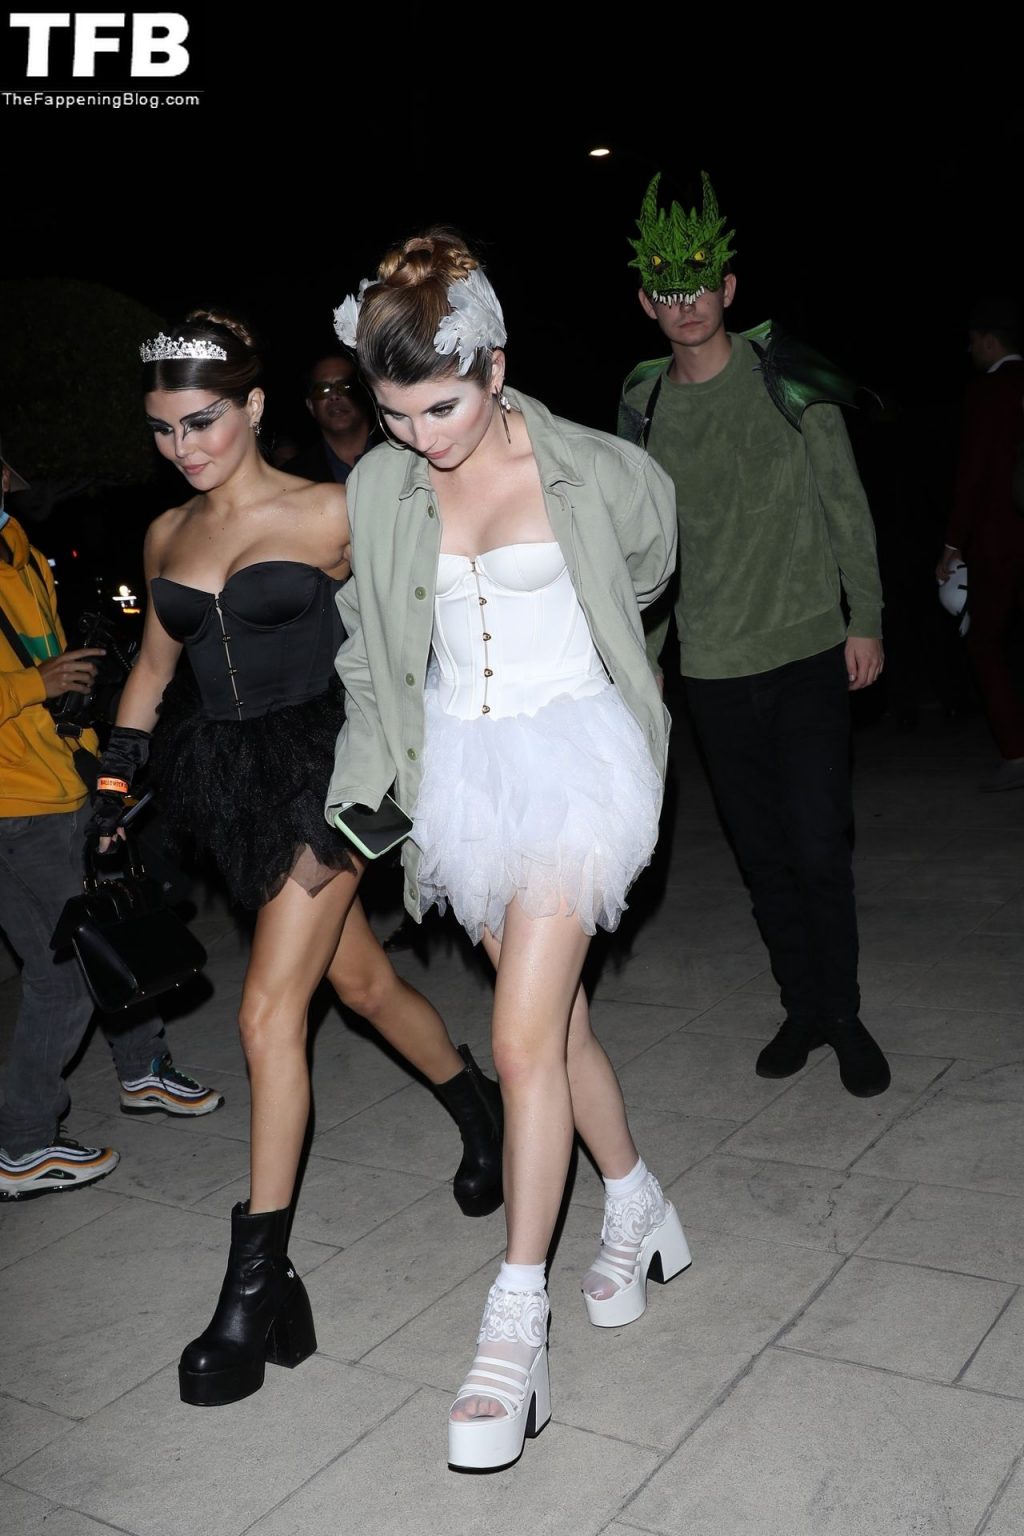 Olivia Jade Giannulli Attends a Halloween Party (22 Photos)